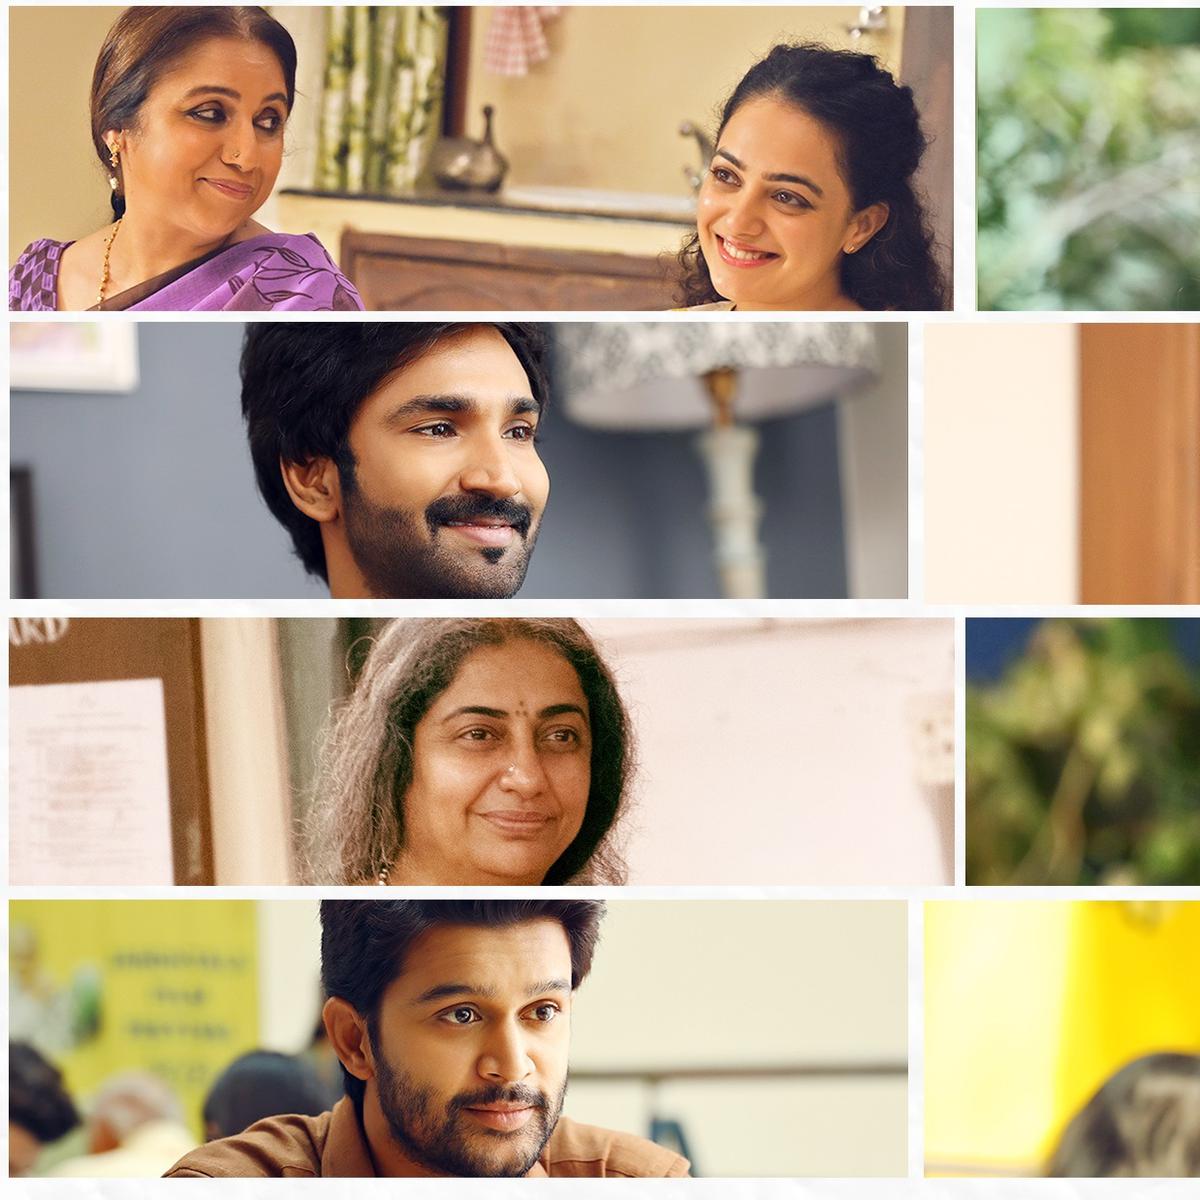 Modern Love Chennai web series review: The sweet, sticky feel of nostalgia